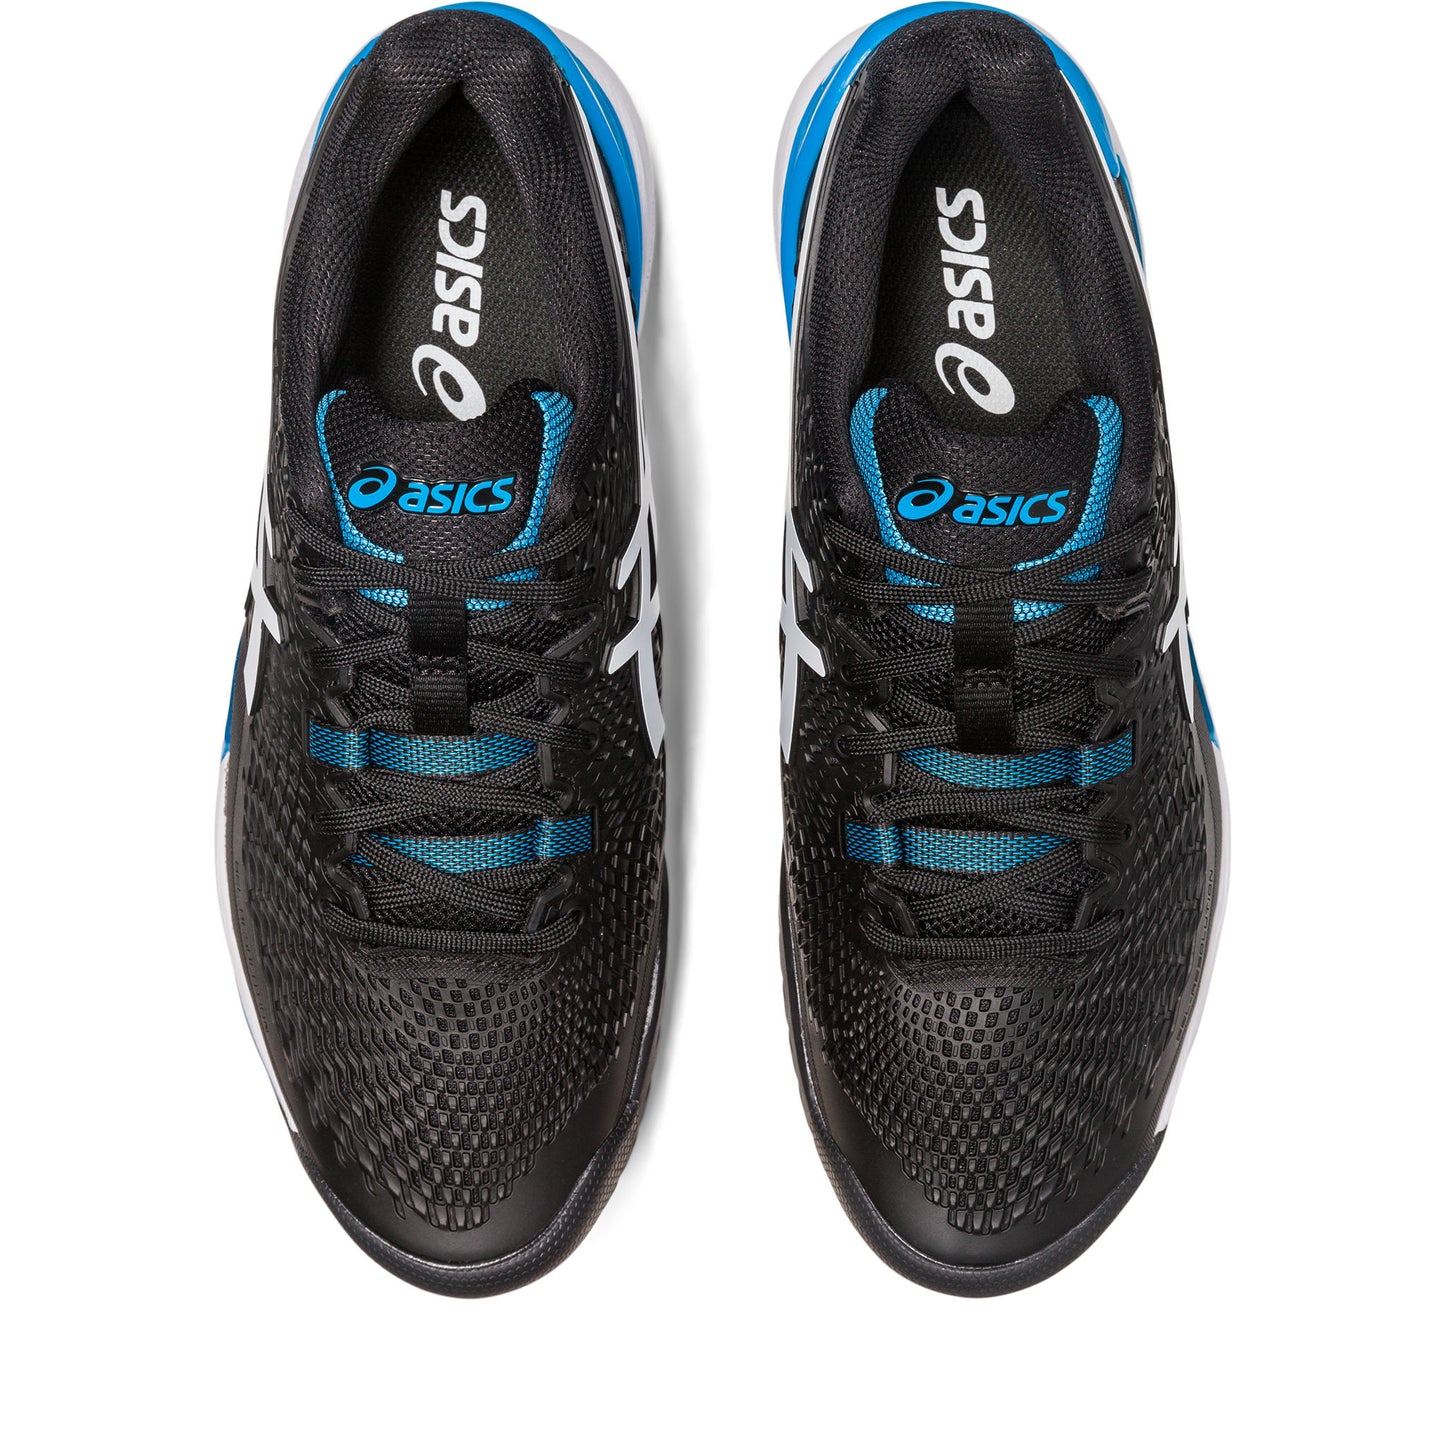 Asics Gel Resolution 9 Men tennis shoes 330.001 Black/Blue